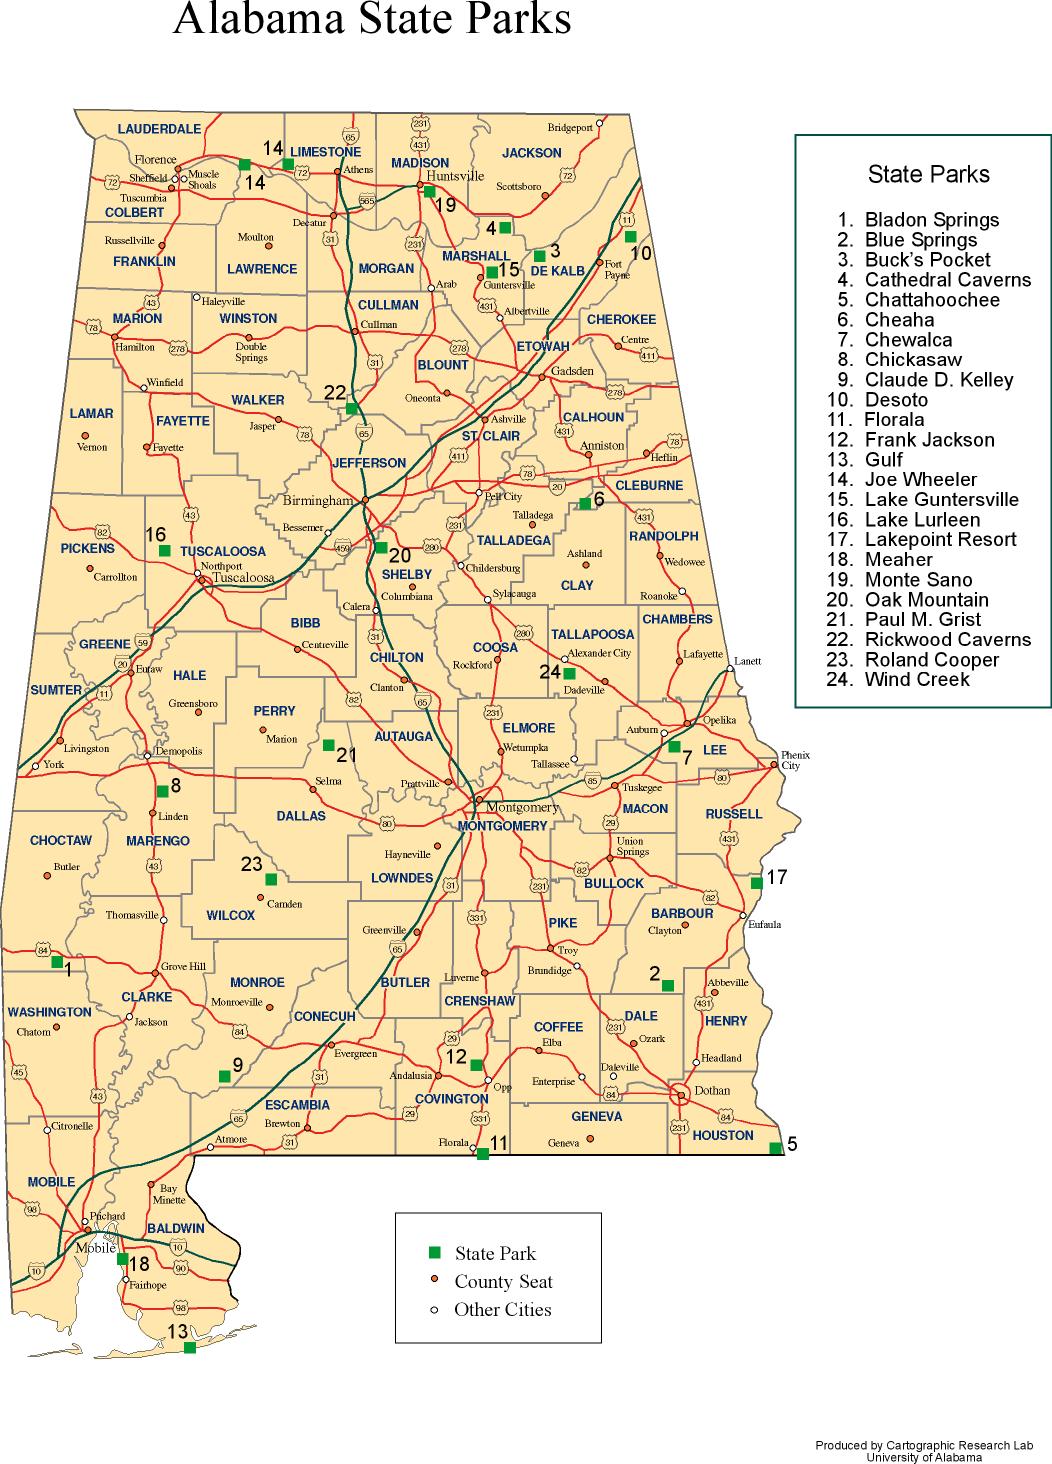 Alabama Outline Maps and Map Links